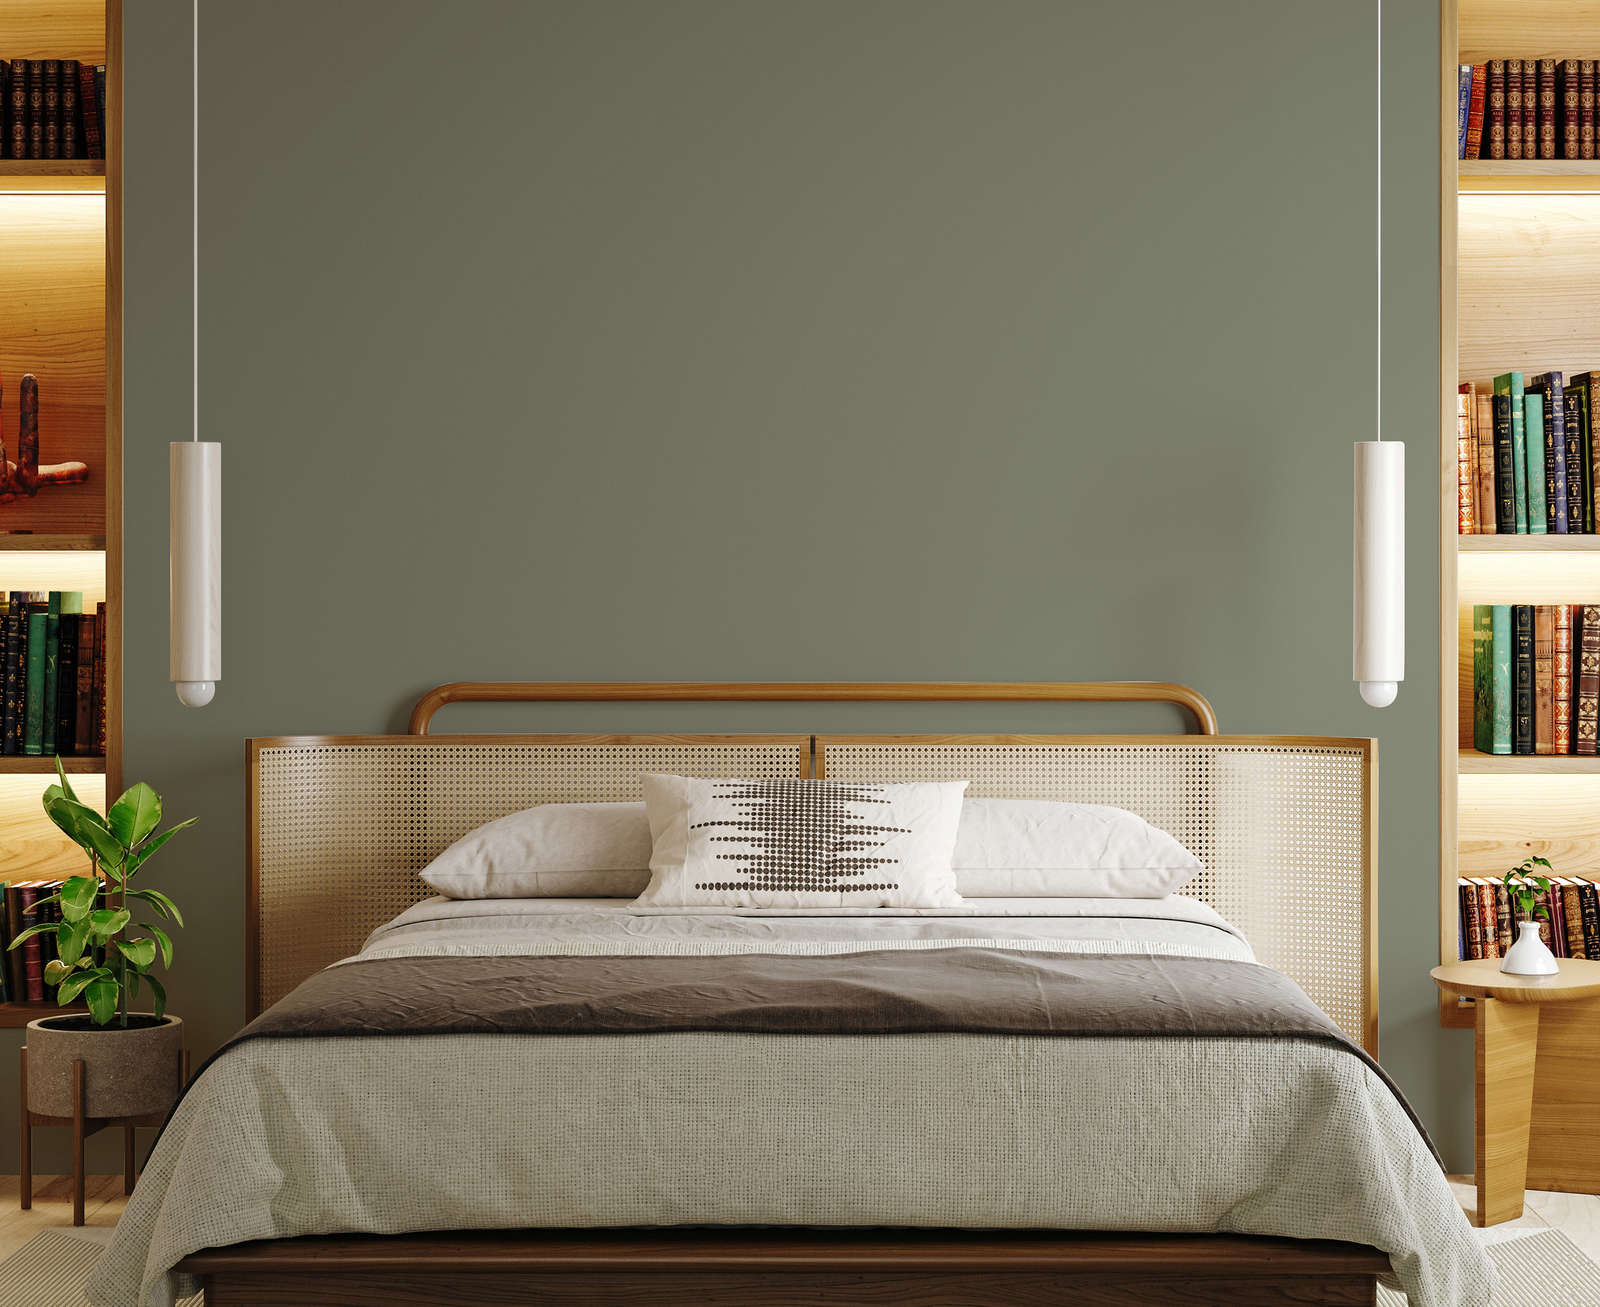             Premium Wandfarbe überzeugendes Olivgrün »Talented calm taupe« NW706 – 2,5 Liter
        